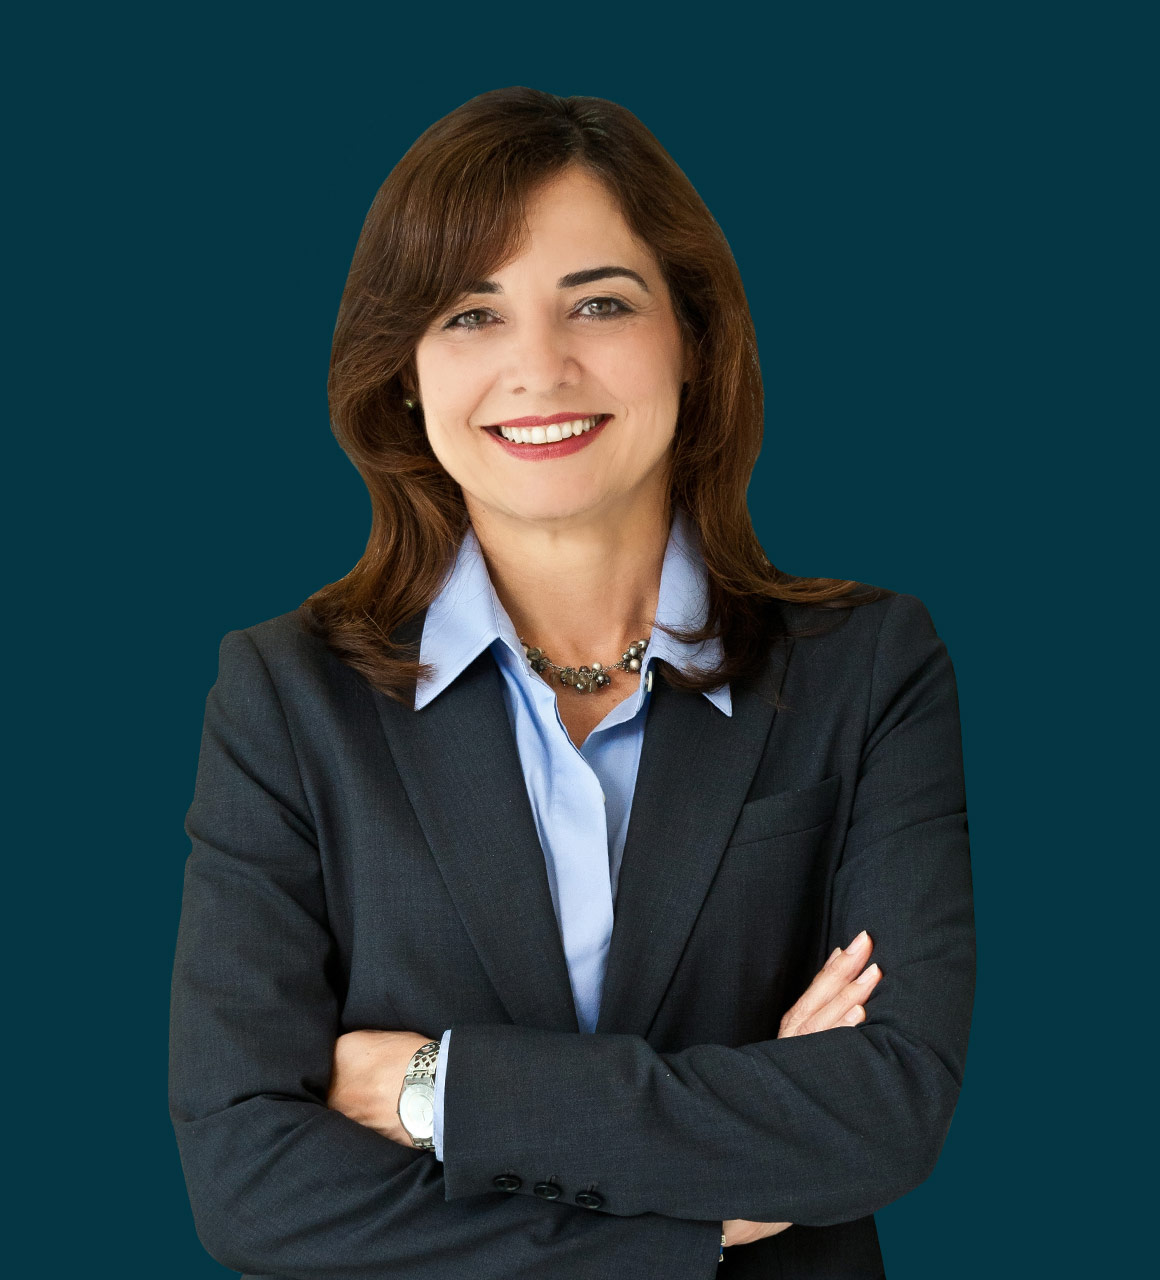 Cristina Carvalho, Managing Partner at Arent Fox